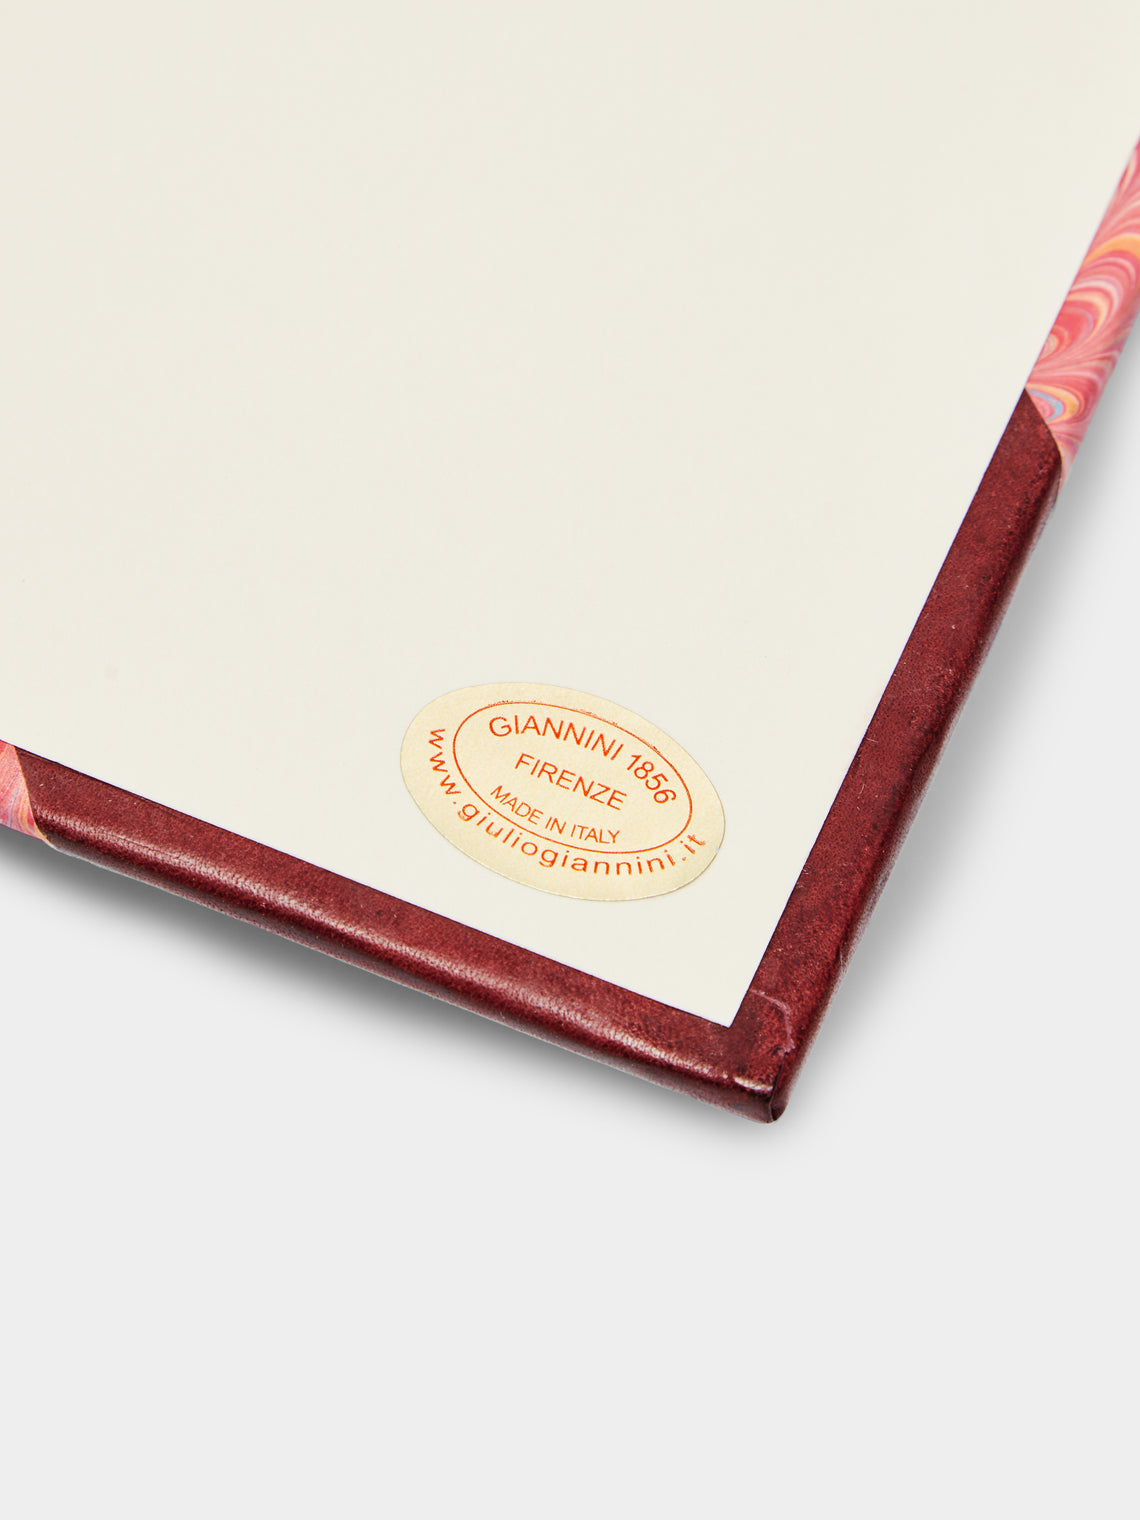 Giannini Firenze - Hand-Marbled Leather Bound Photo Album (30cm x 23cm) -  - ABASK